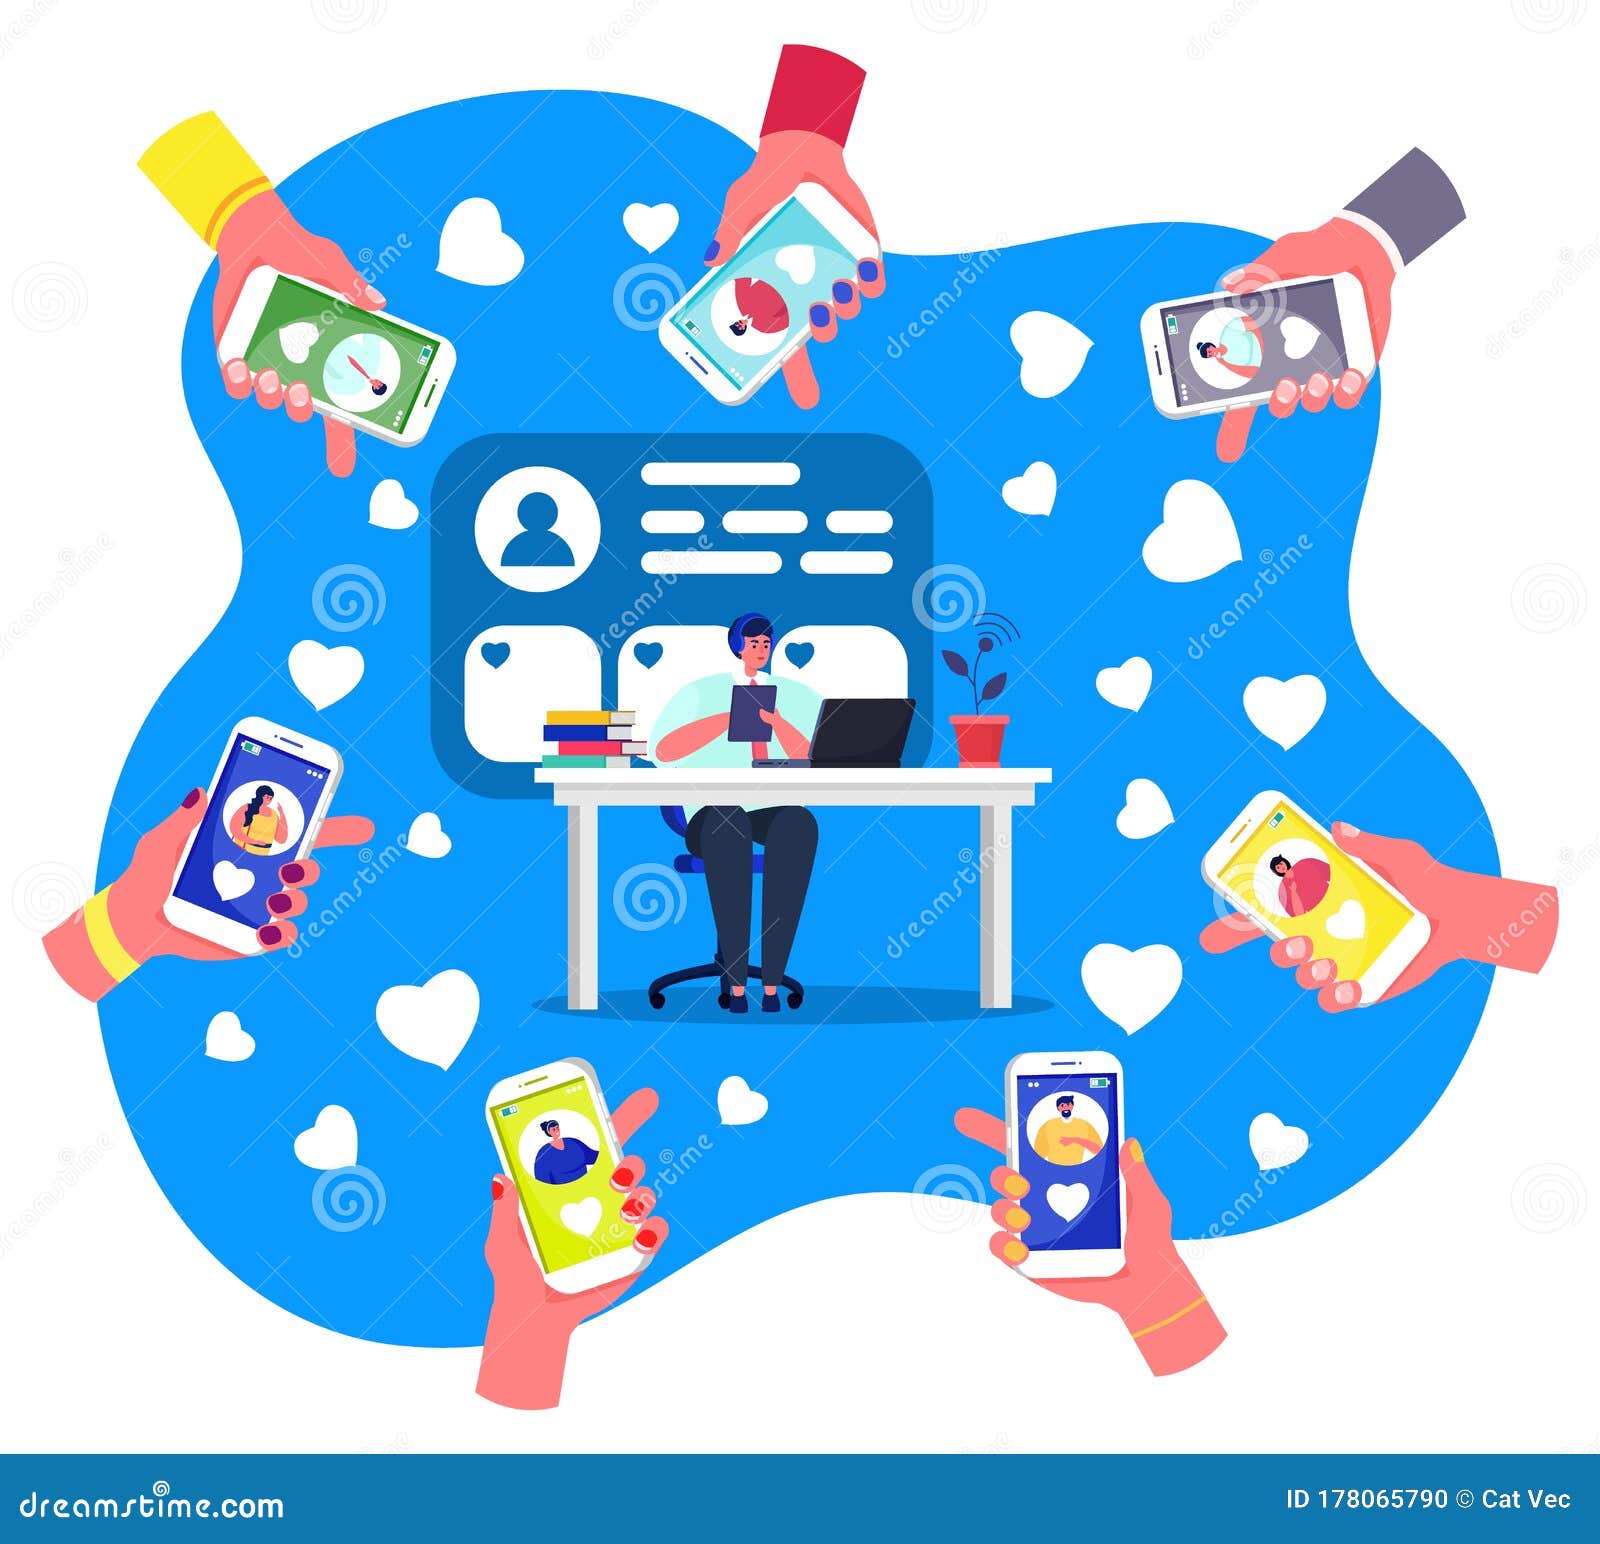 Social Media Marketing Vector Illustration, Cartoon Hands with Smartphone  Liking Online Post of Flat Man Blogger Stock Vector - Illustration of  group, flat: 178065790